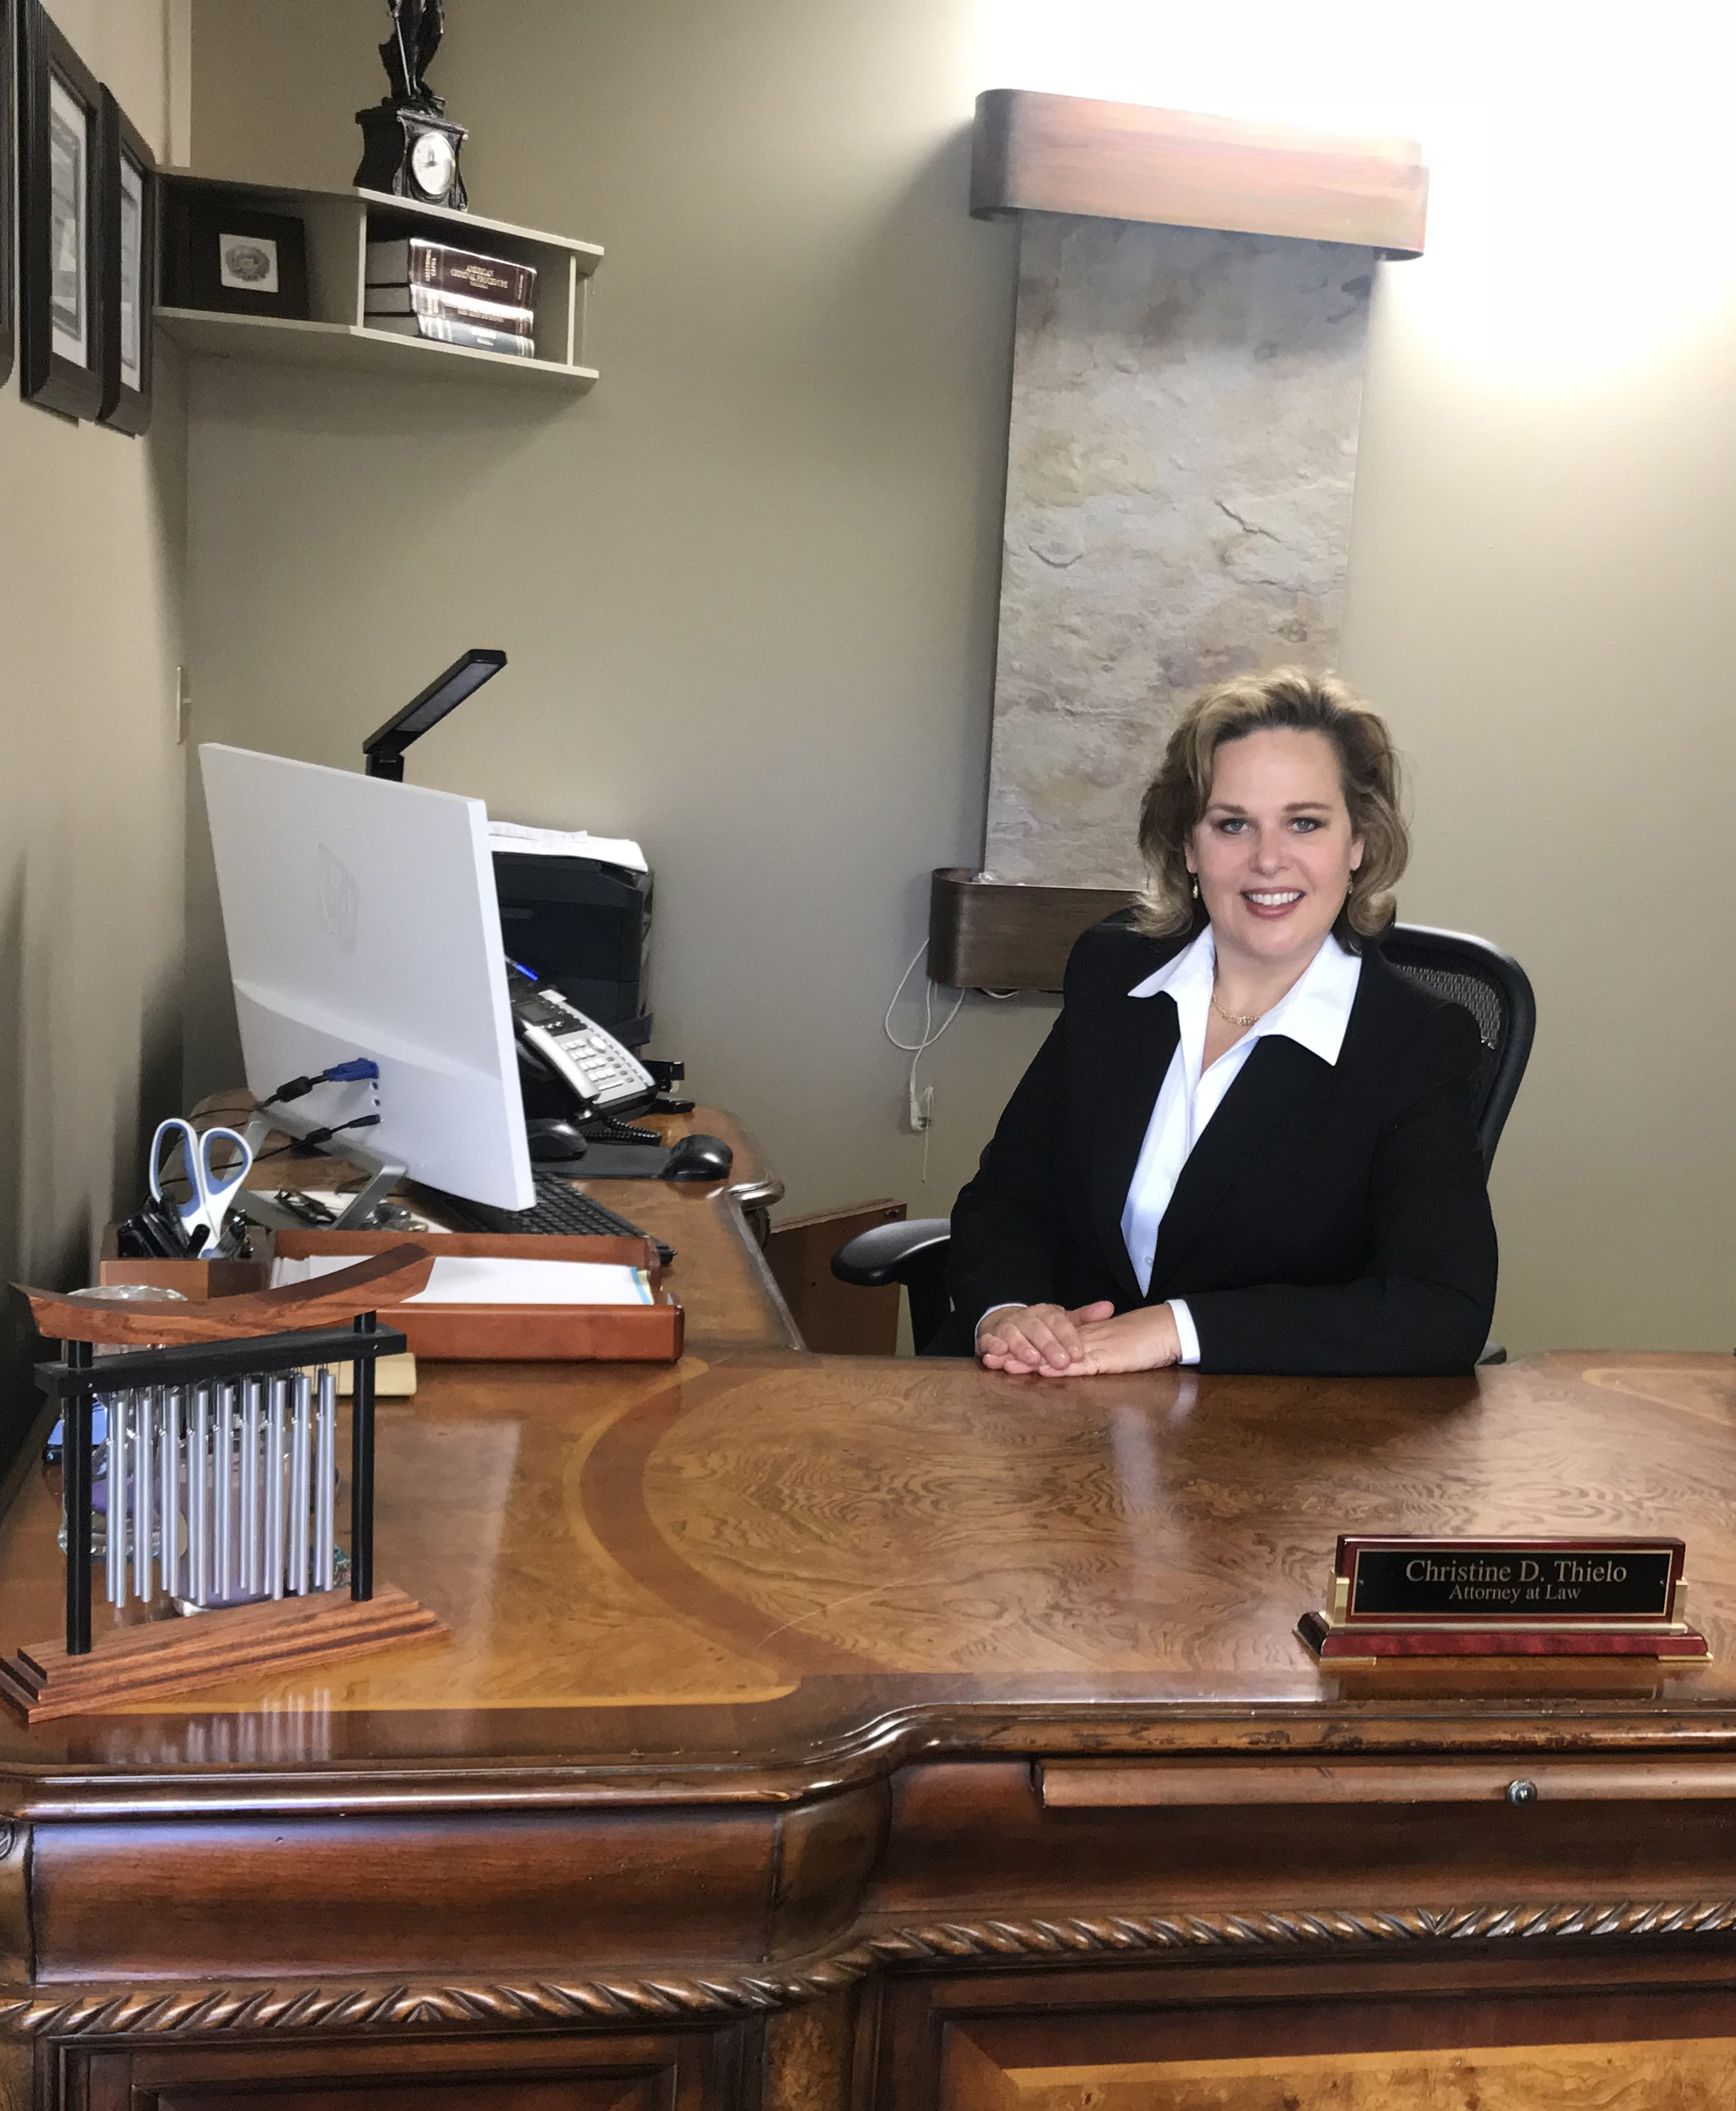 Attorney Christine D. Thielo